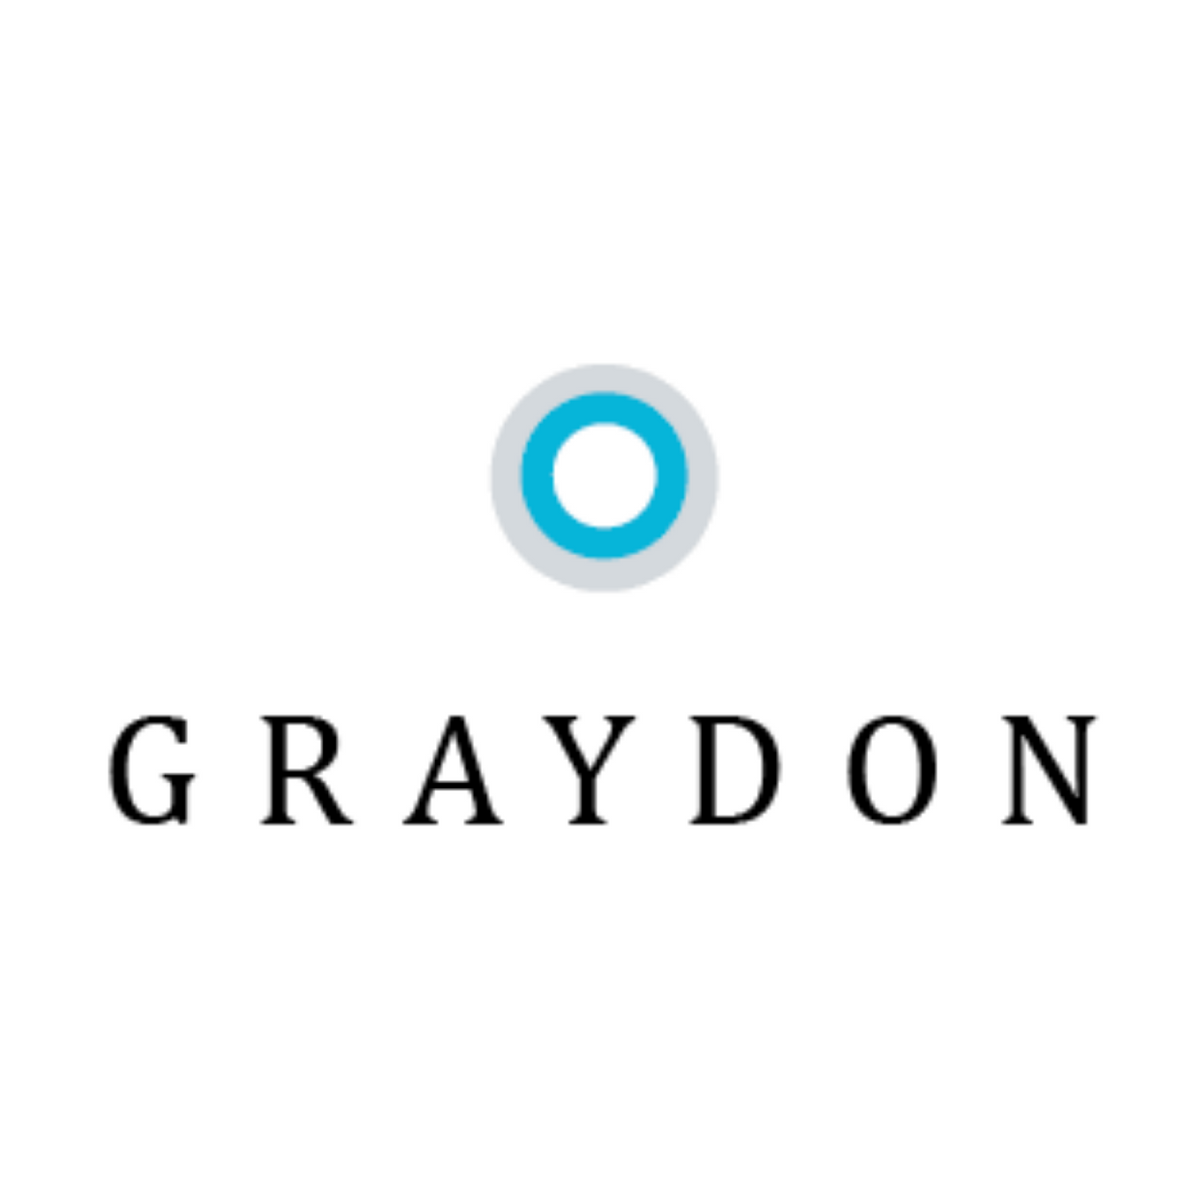 Graydon – The Beauty Doctrine